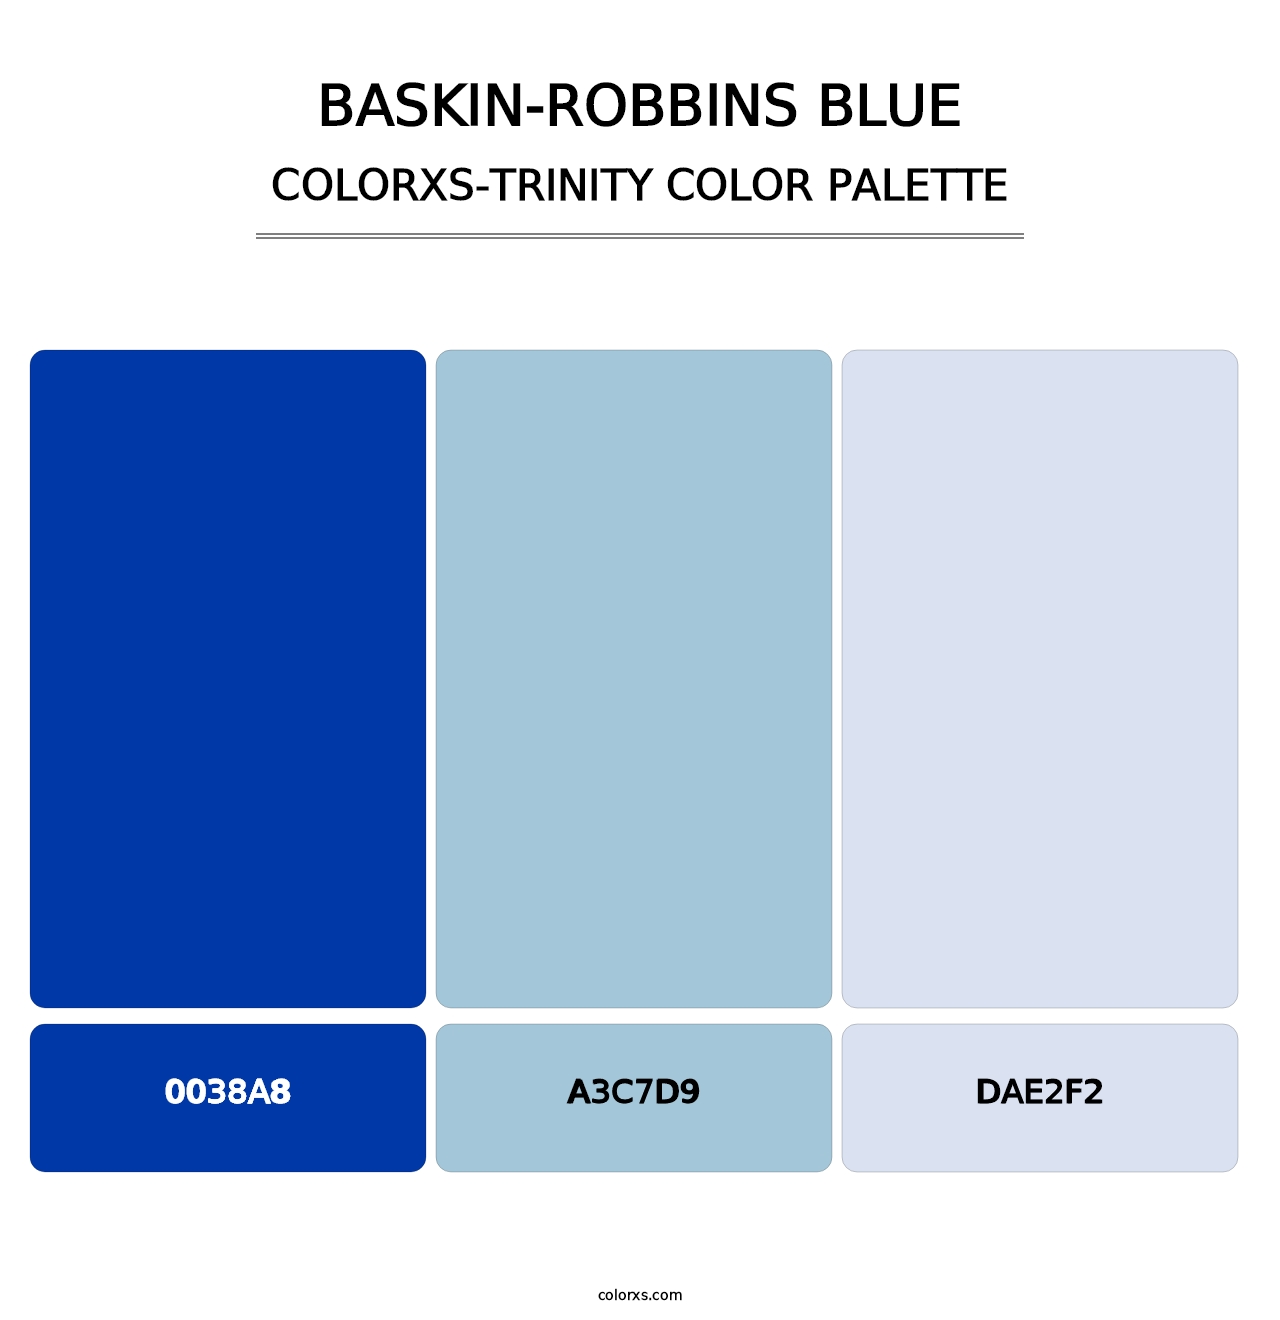 Baskin-Robbins Blue - Colorxs Trinity Palette